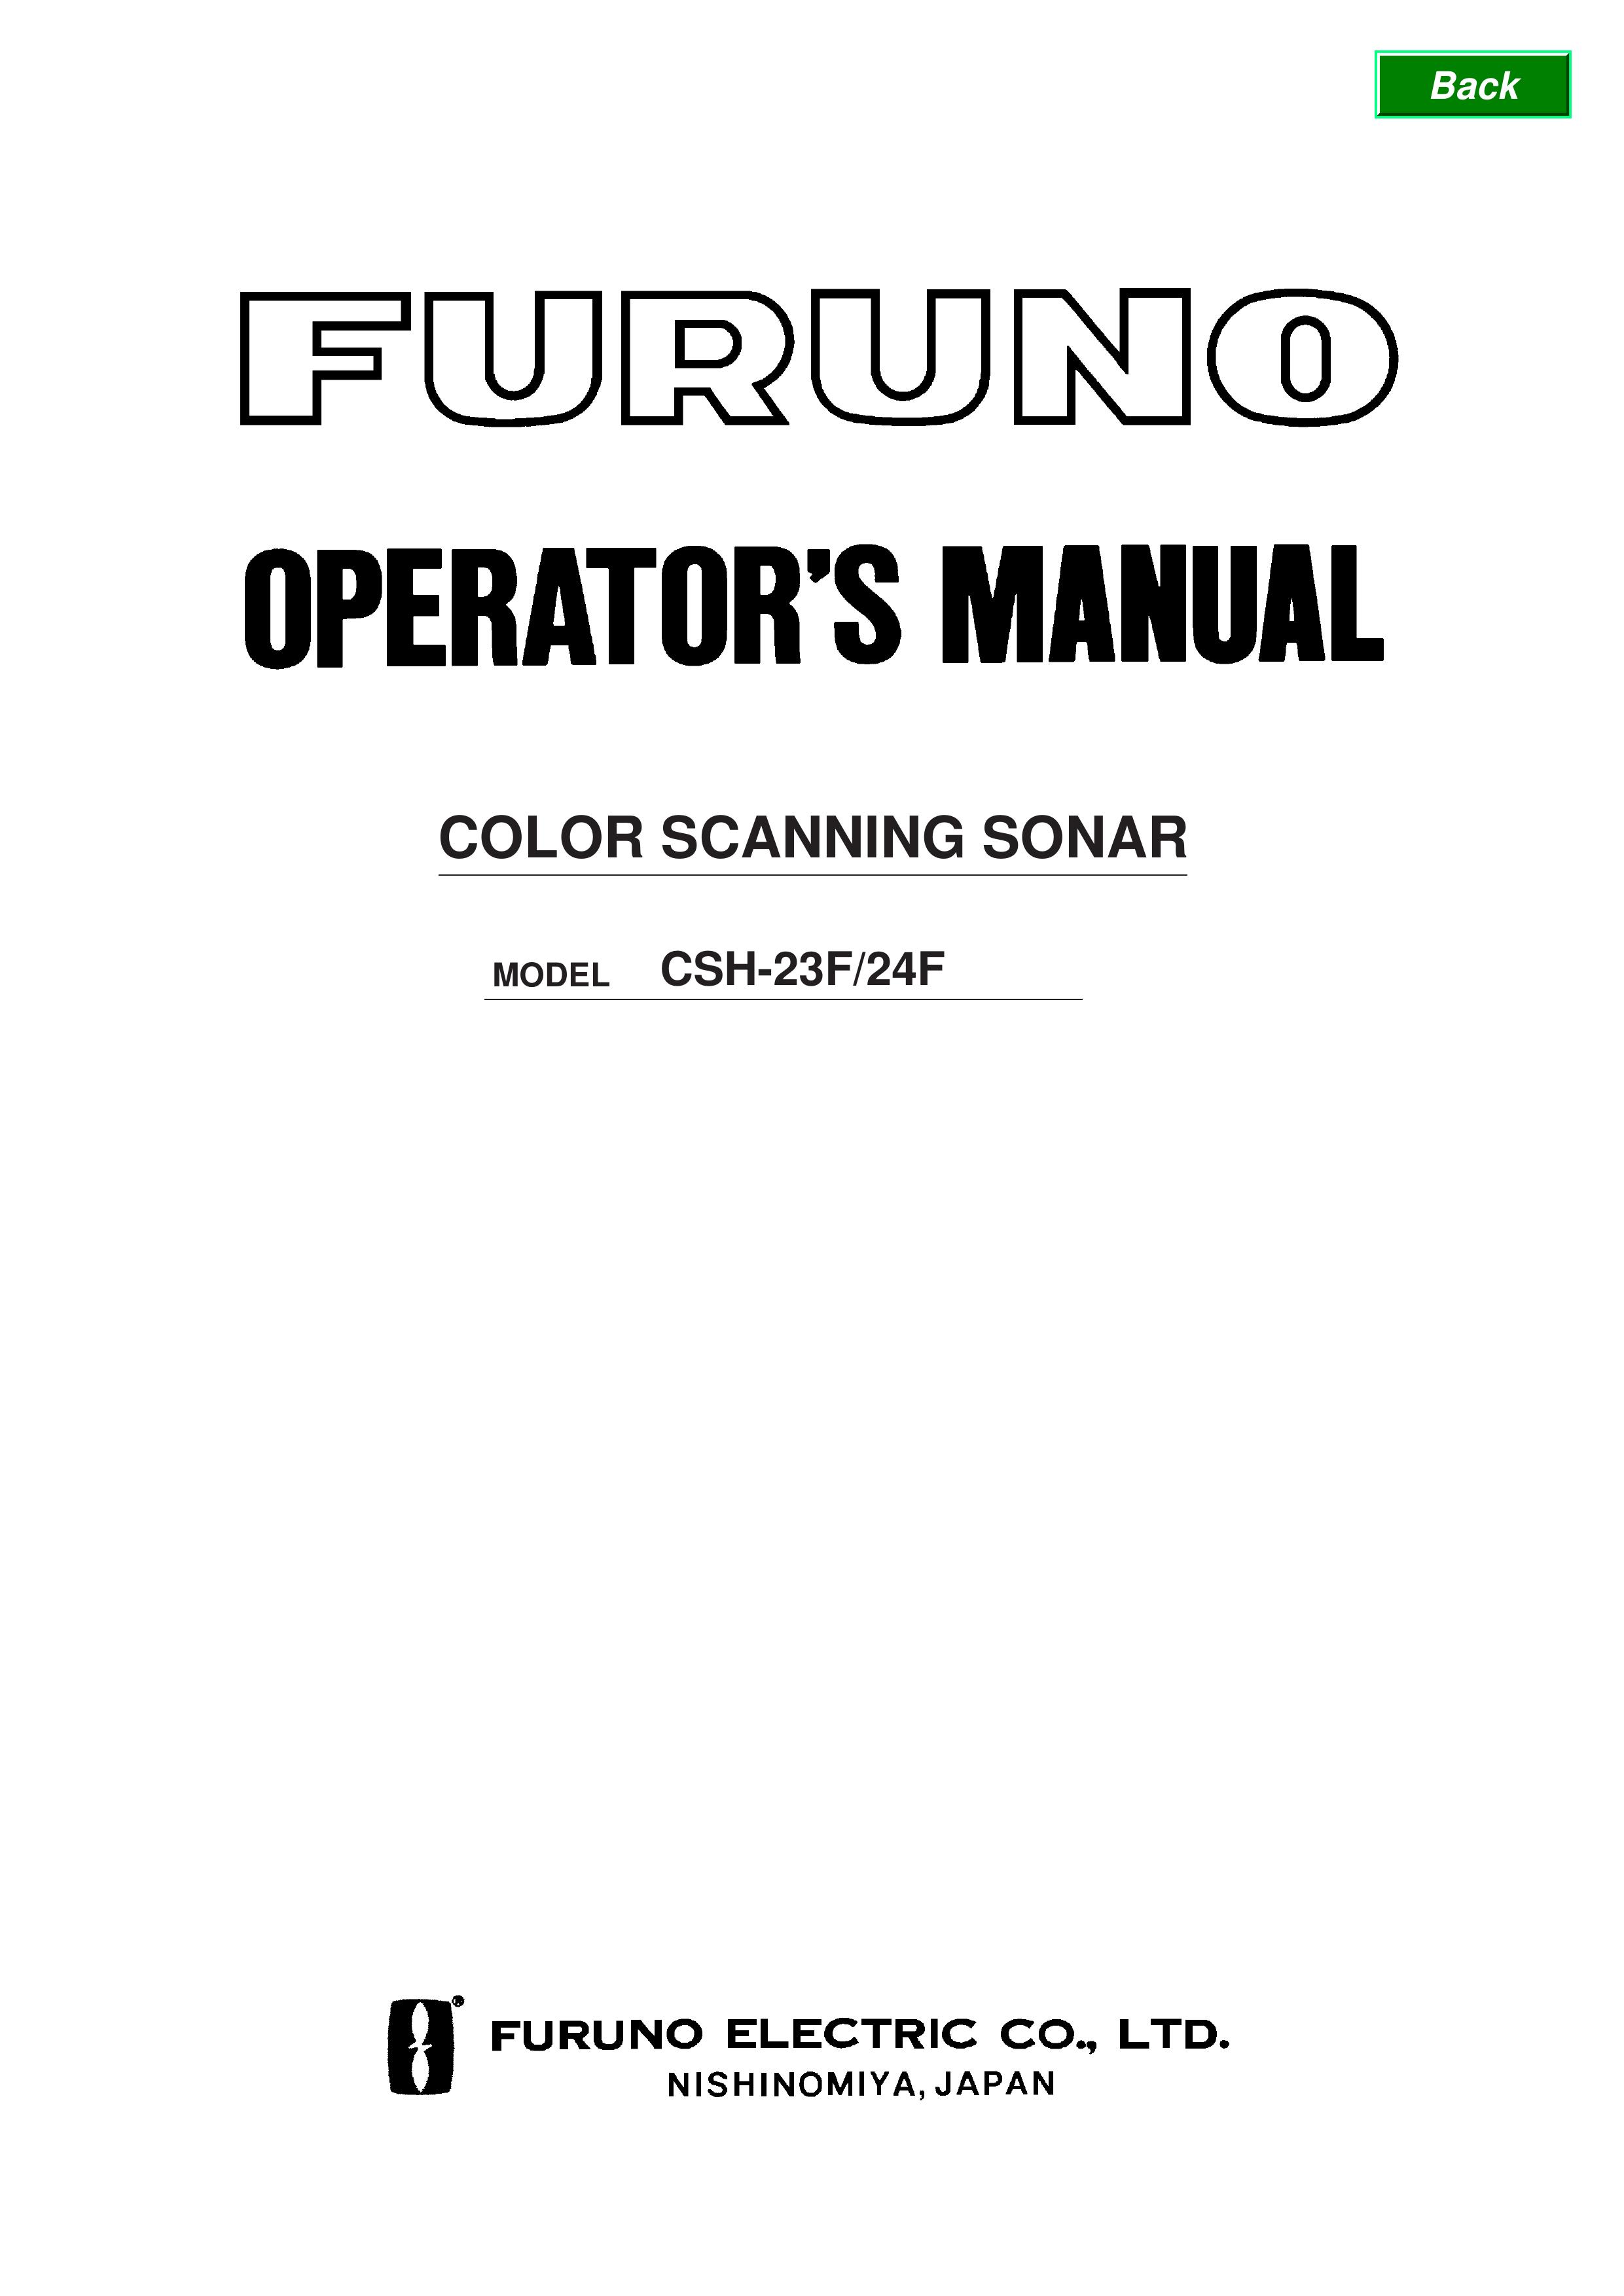 Furuno CSH-23F/24F SONAR User Manual